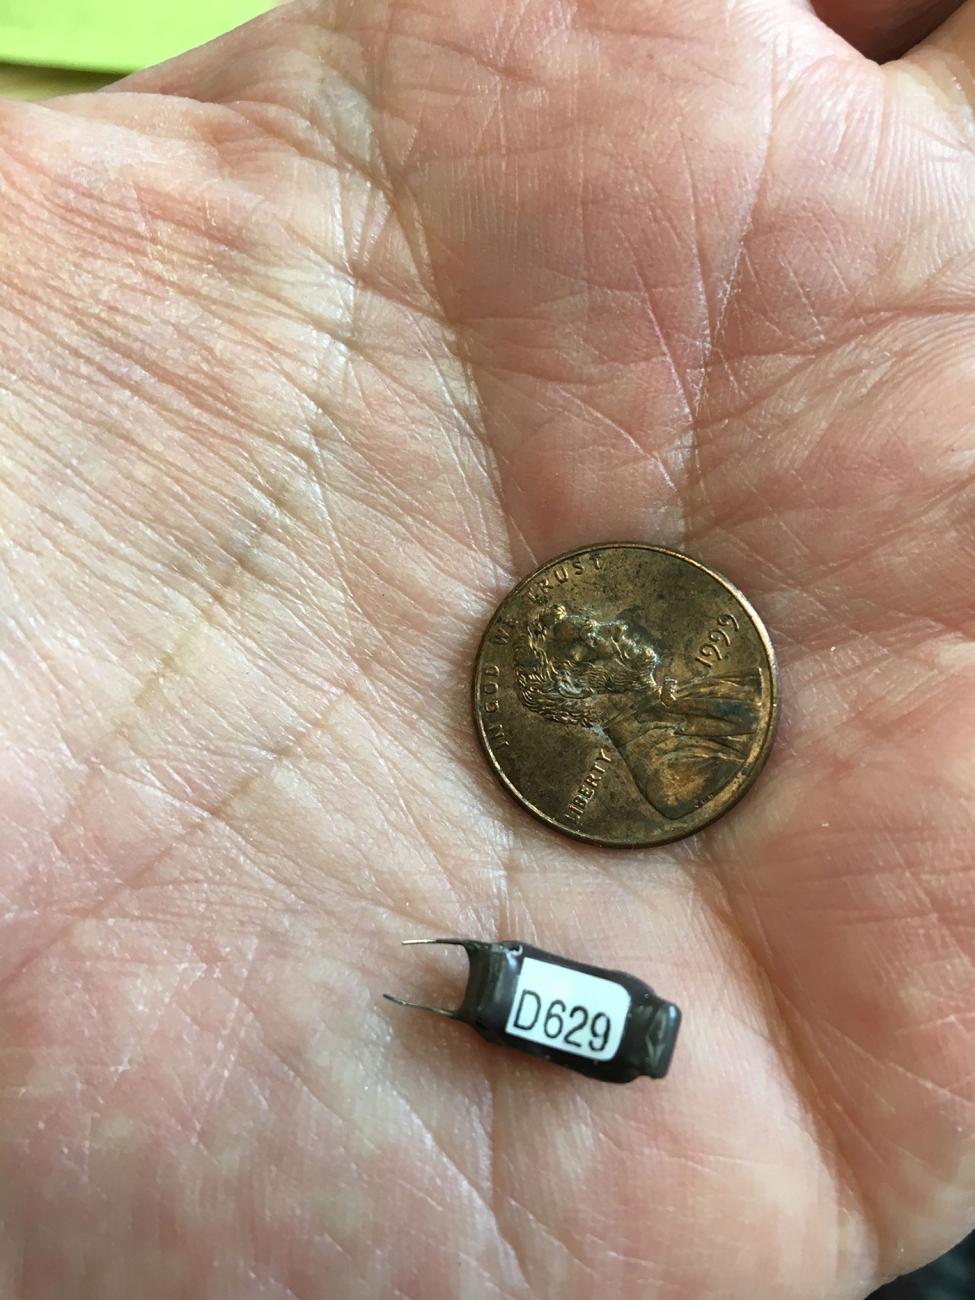 tiny transmitter next to a larger penny